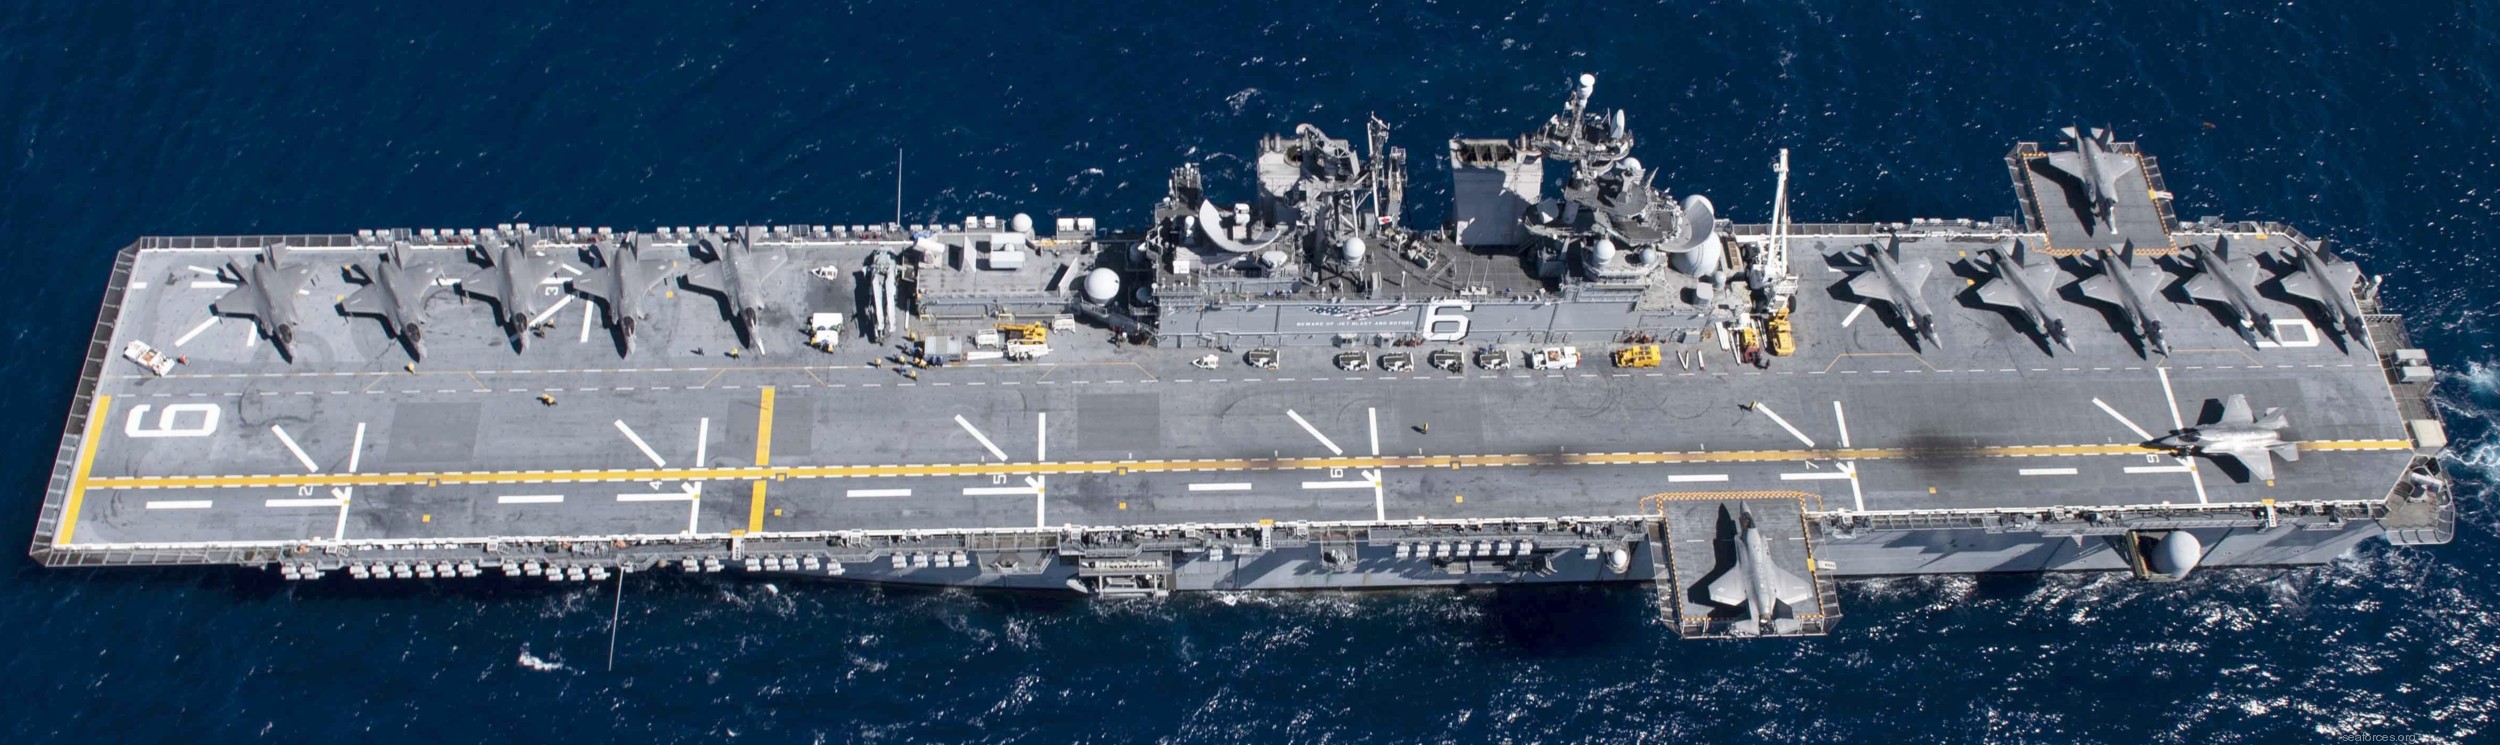 lha-6 uss america amphibious assault ship us navy 04